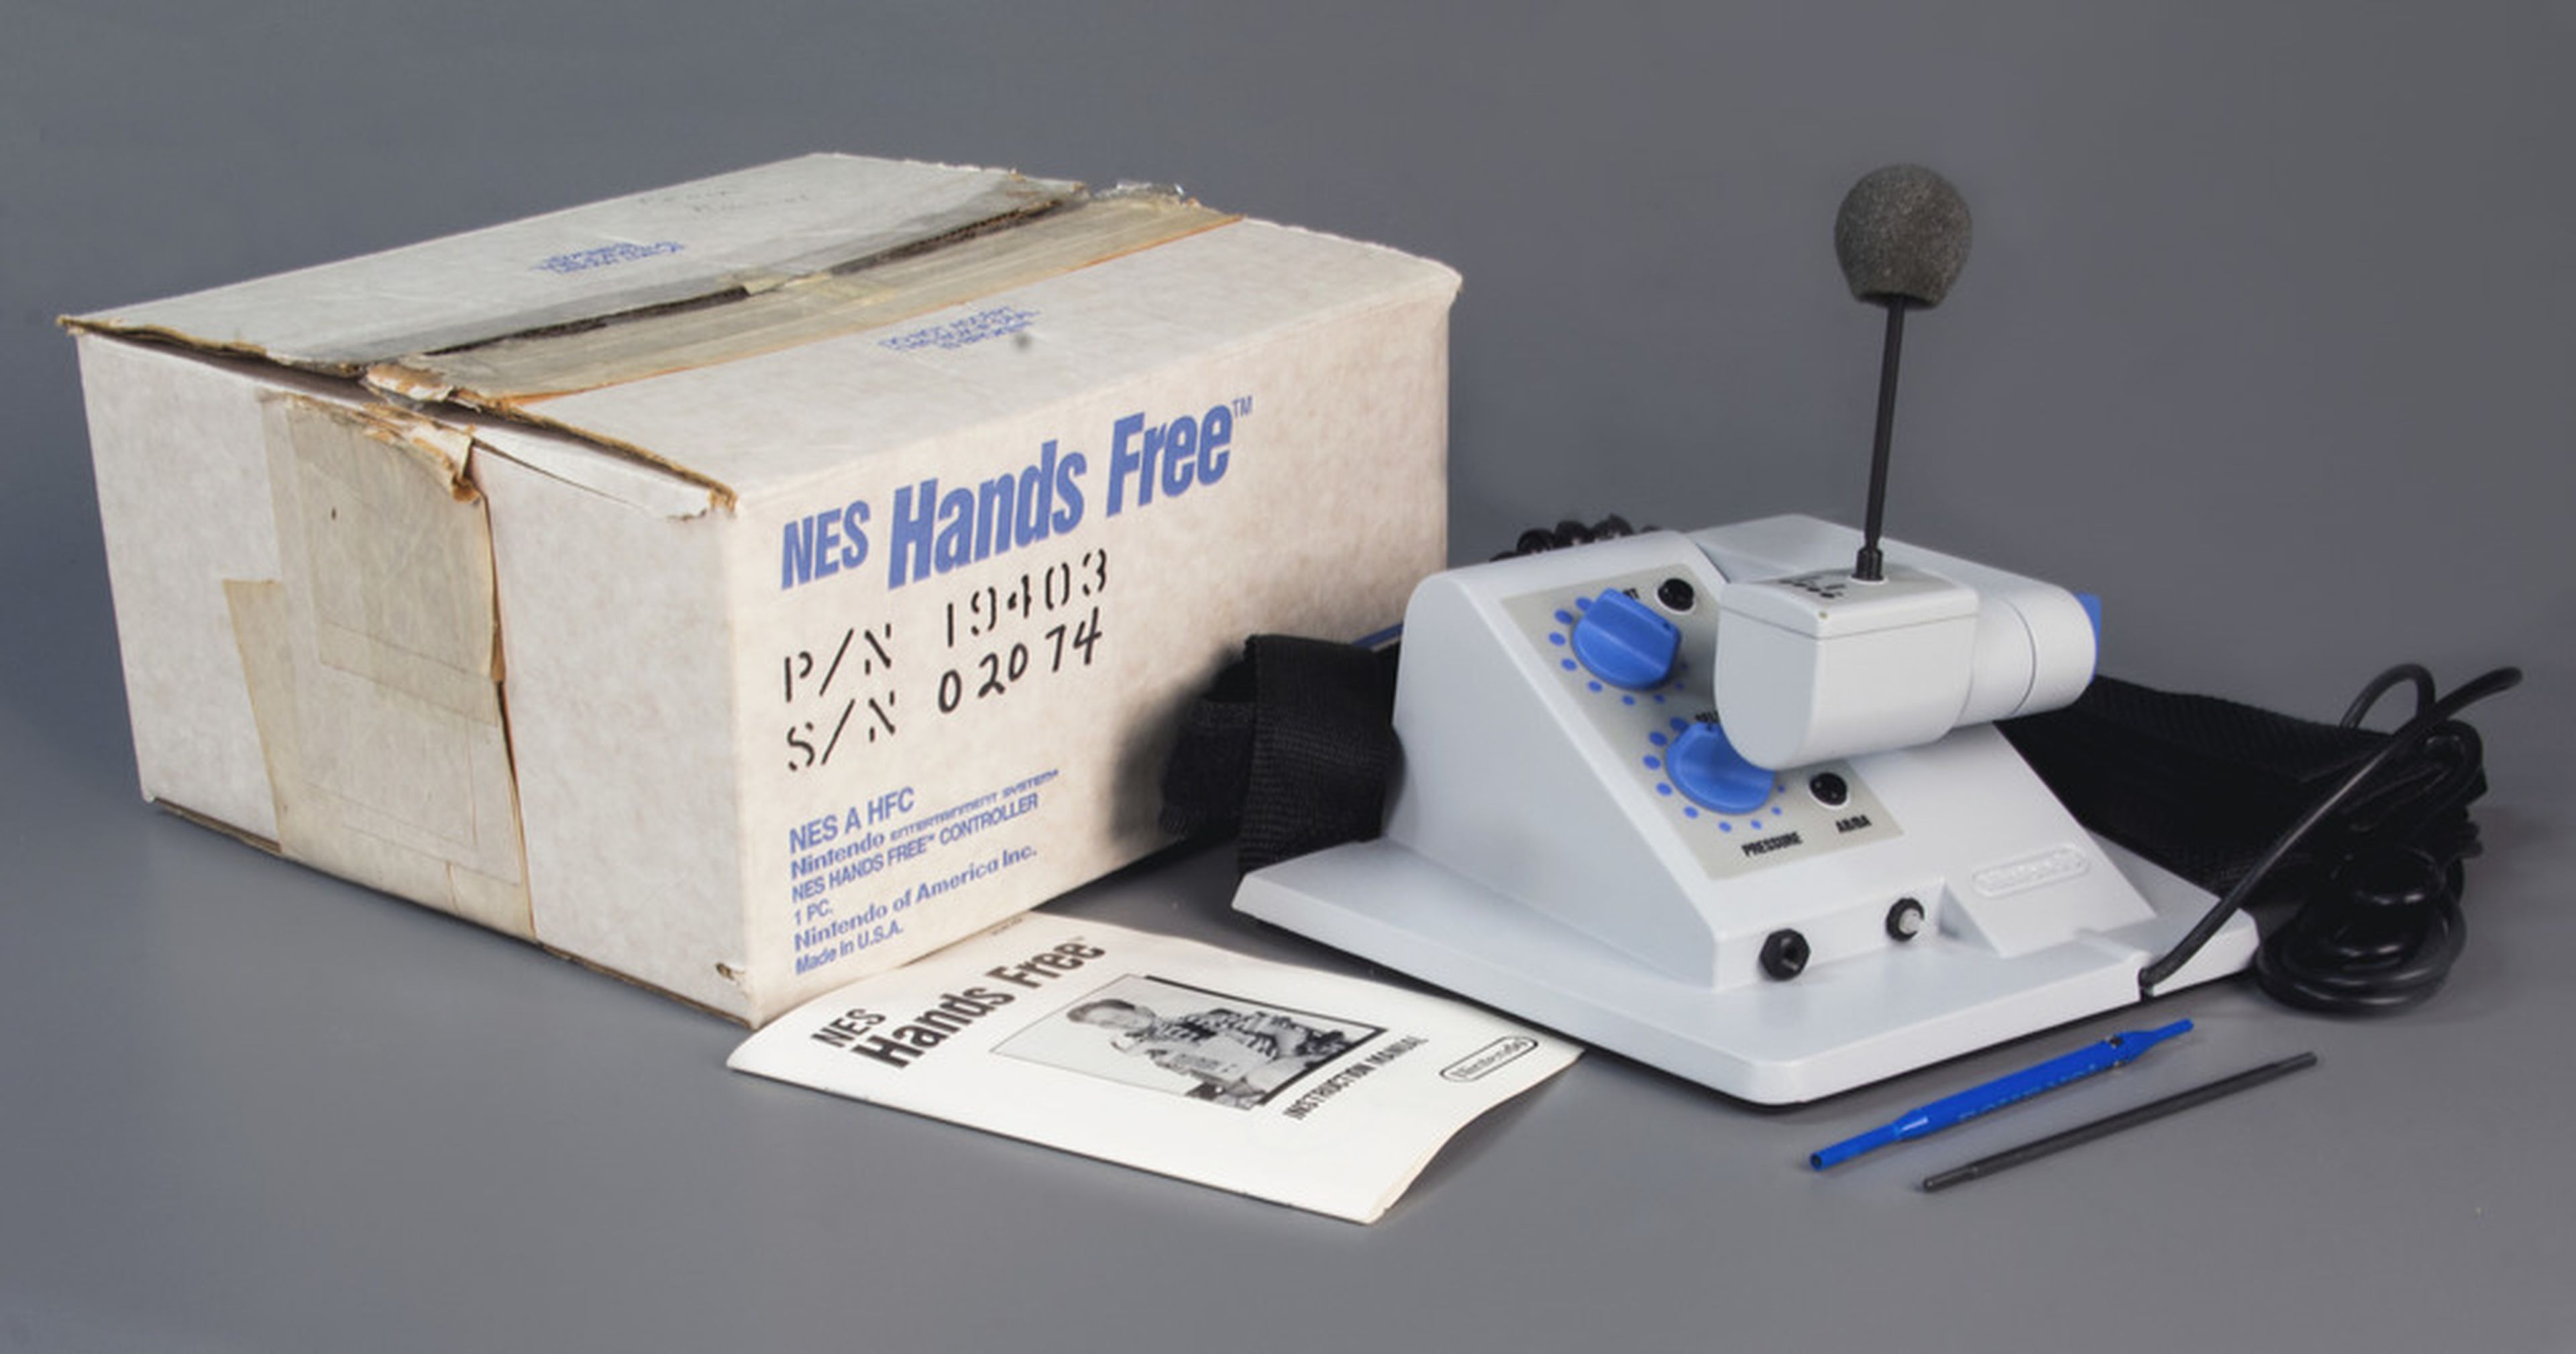 NES Hands free controller